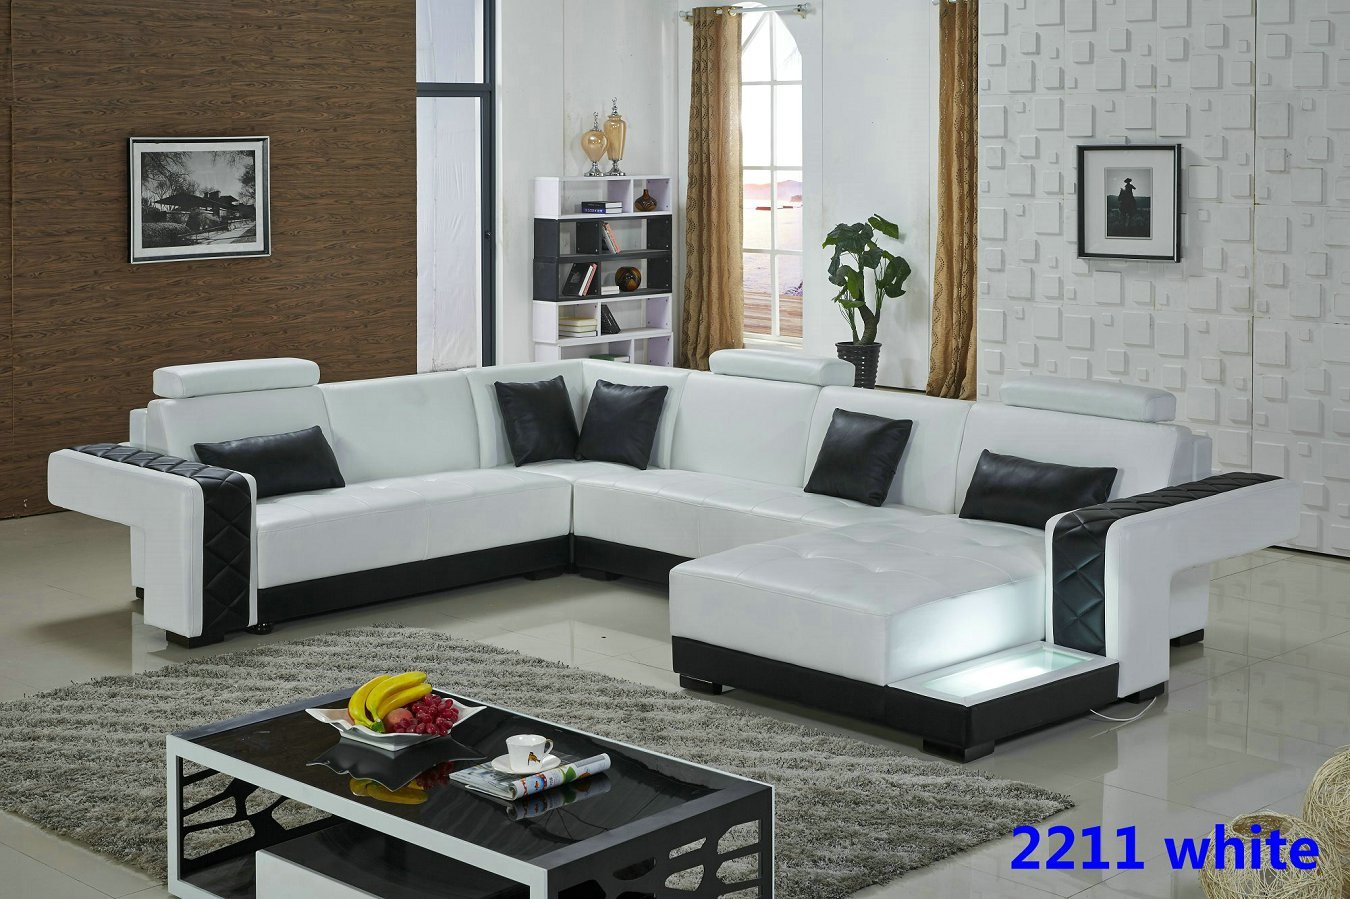 European Home Furniture Modern Design Leather Living Room Sofa